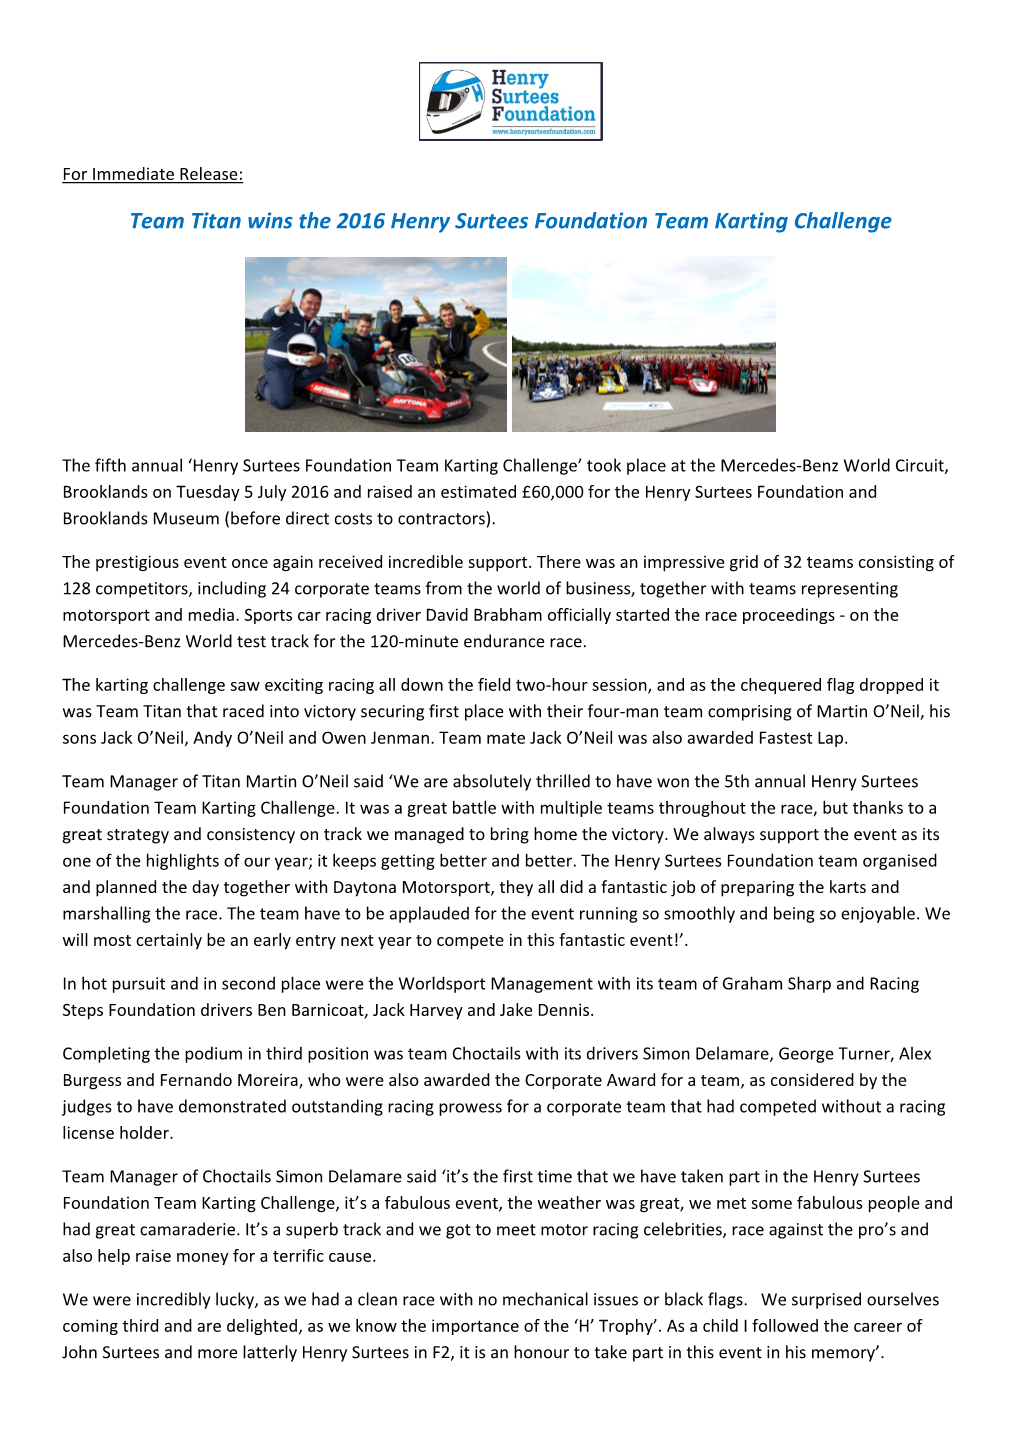 Team Titan Wins the 2016 Henry Surtees Foundation Team Karting Challenge